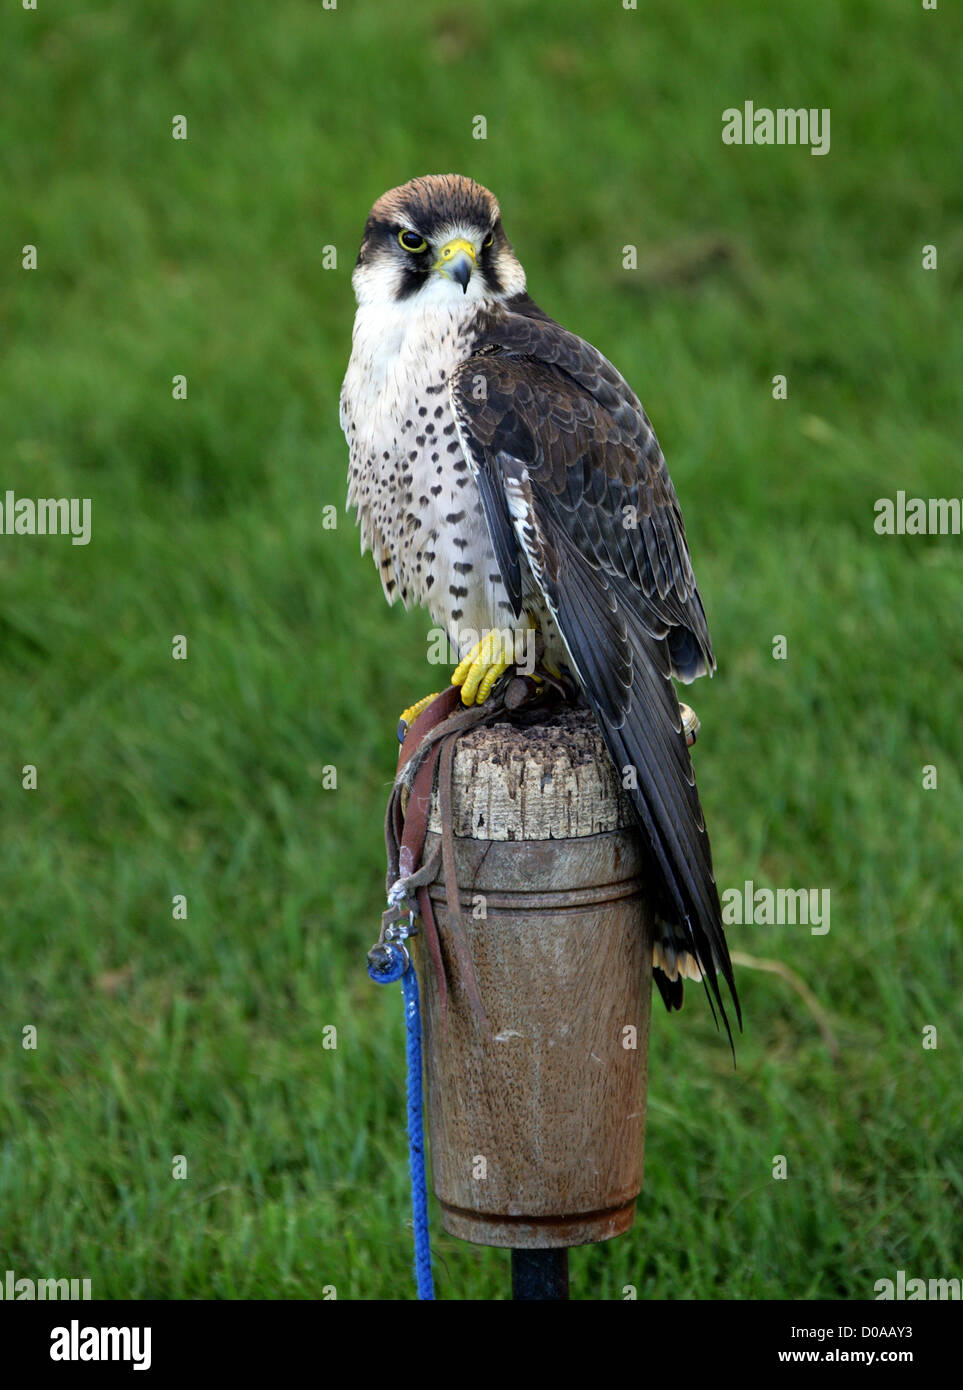 Lanner Falcon, Falco biarmicus, Falconidae, Falconiformes. Europe, Africa and Asia. Stock Photo